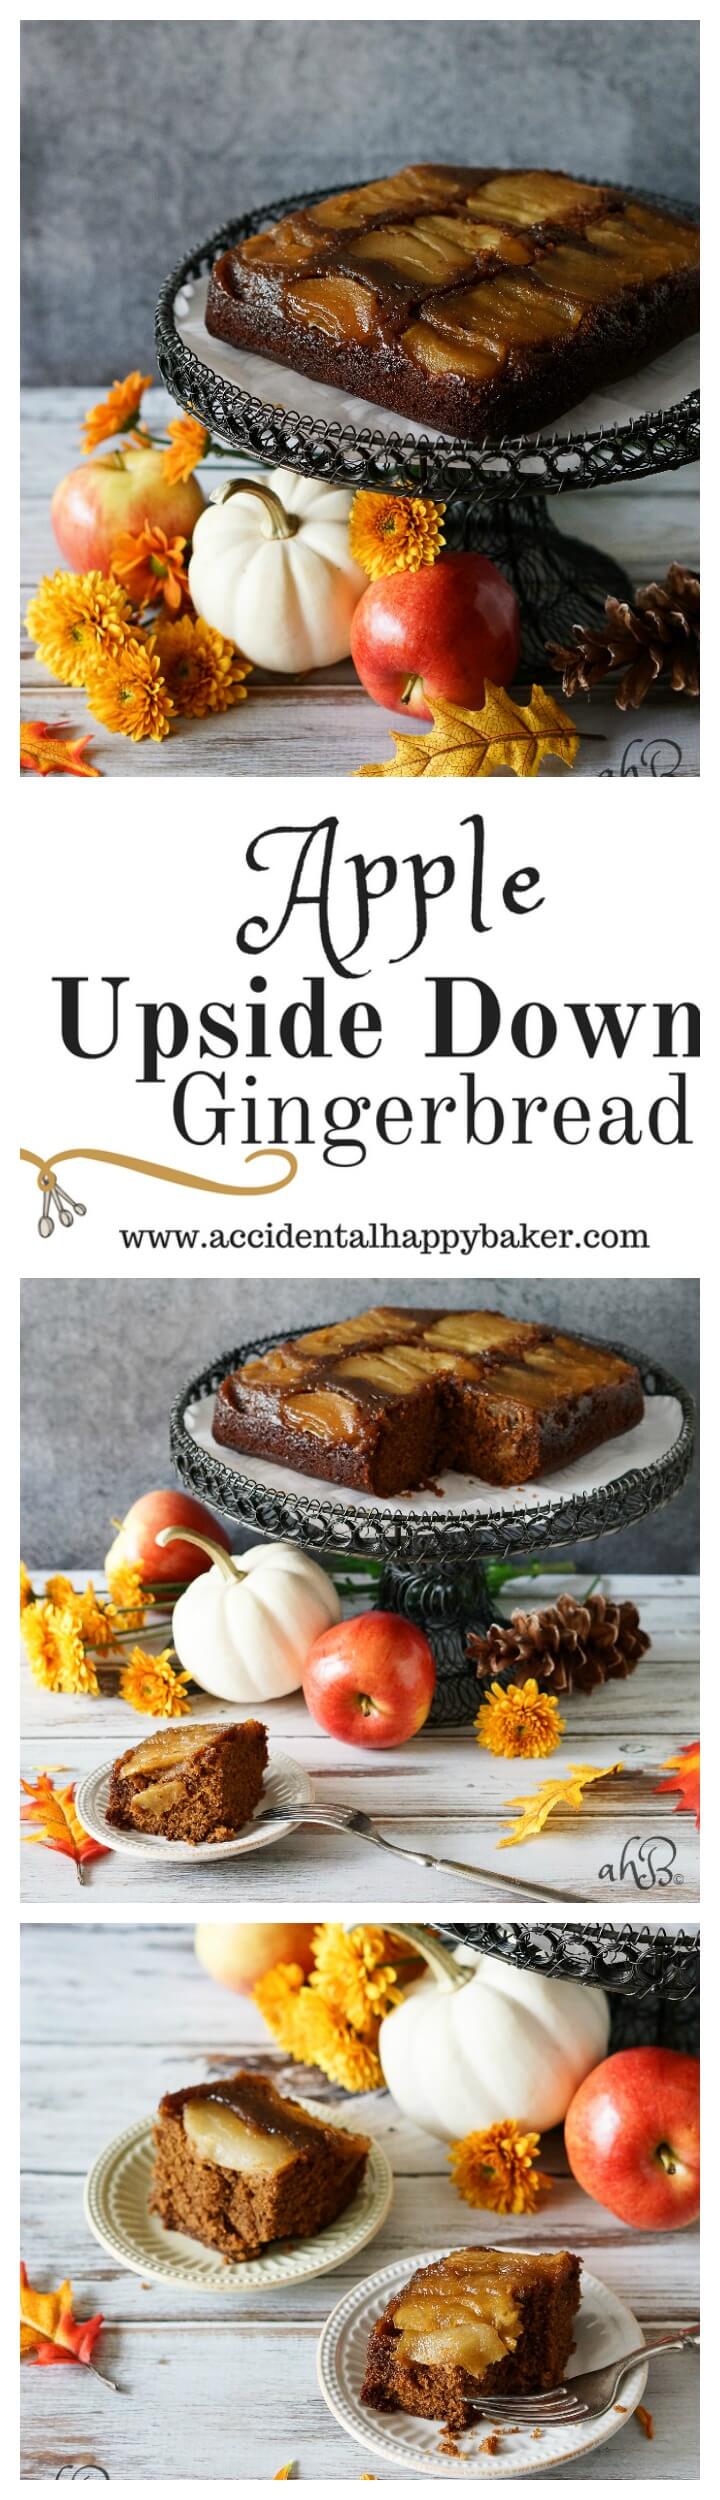 Apple Upside Down Gingerbread